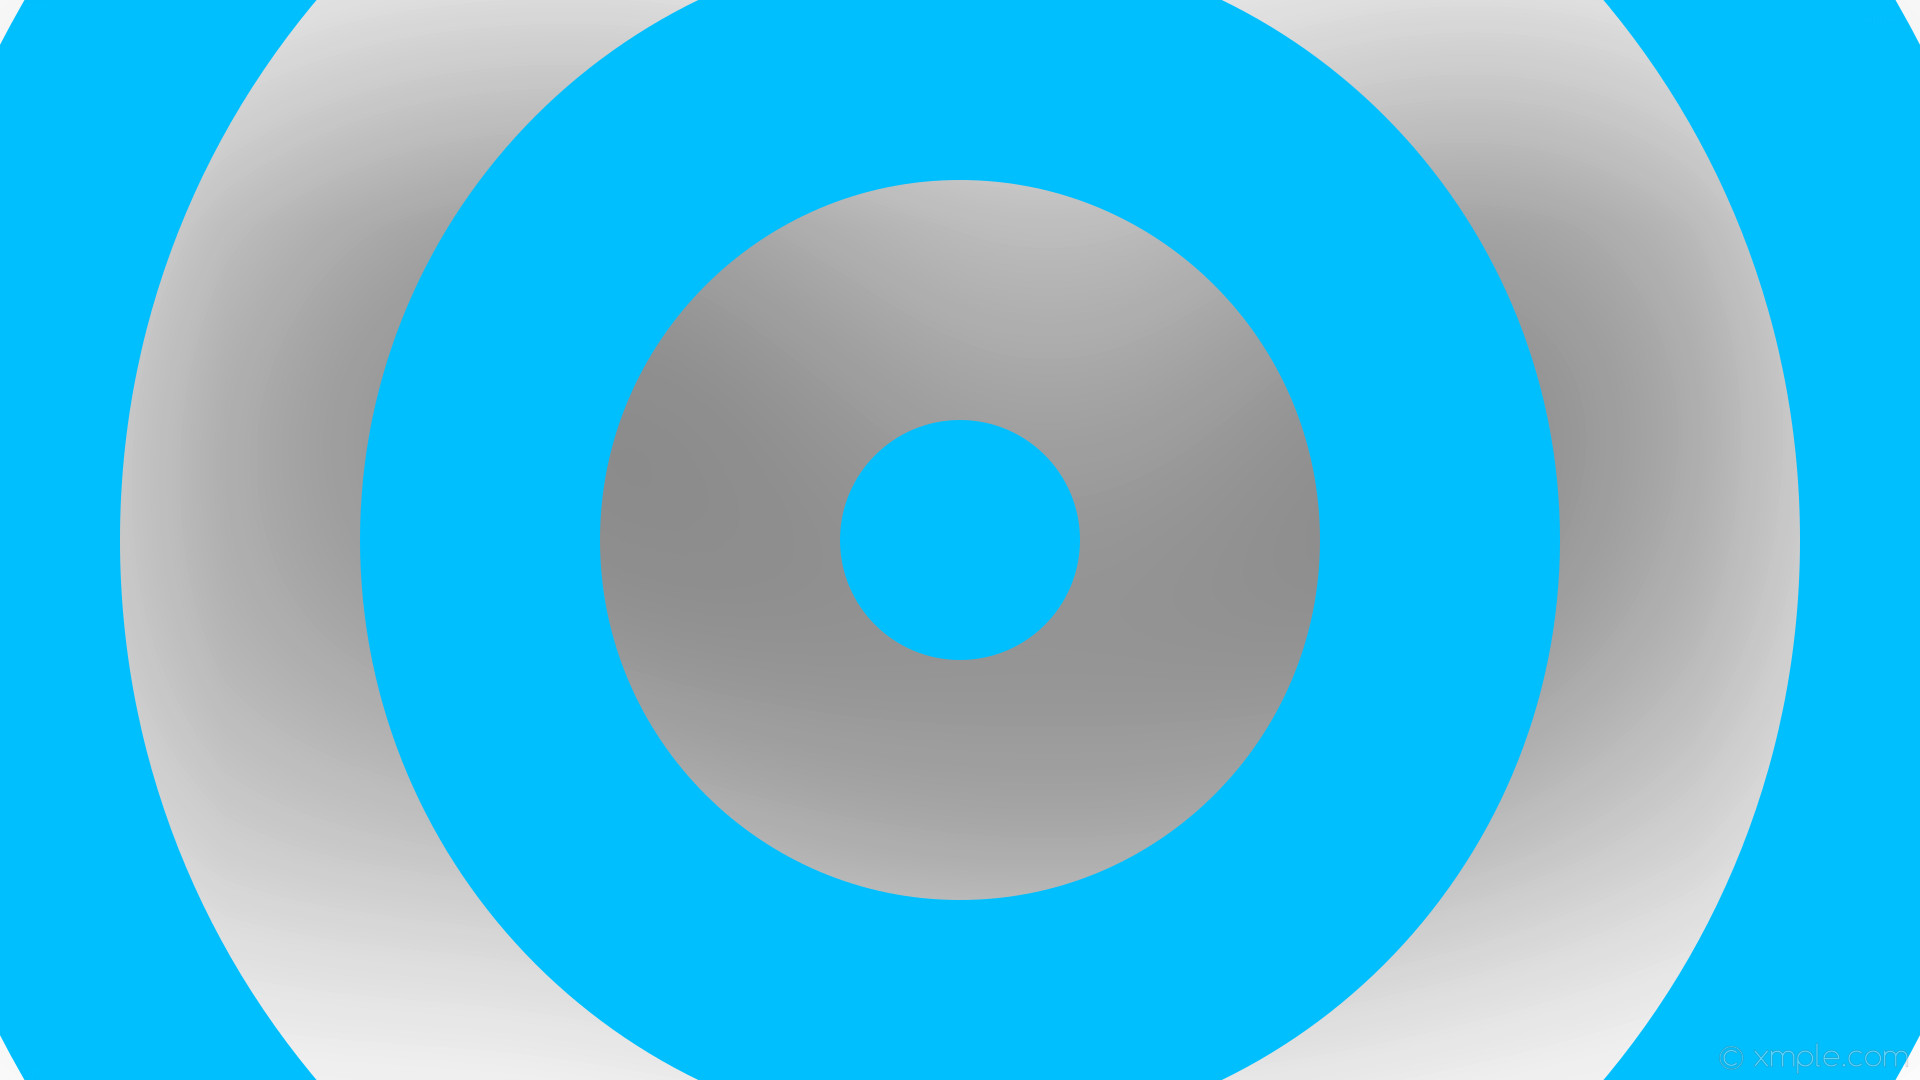 1920x1080 wallpaper circles white concentric blue rings drop shadow deep sky blue  #ffffff #00bfff 8